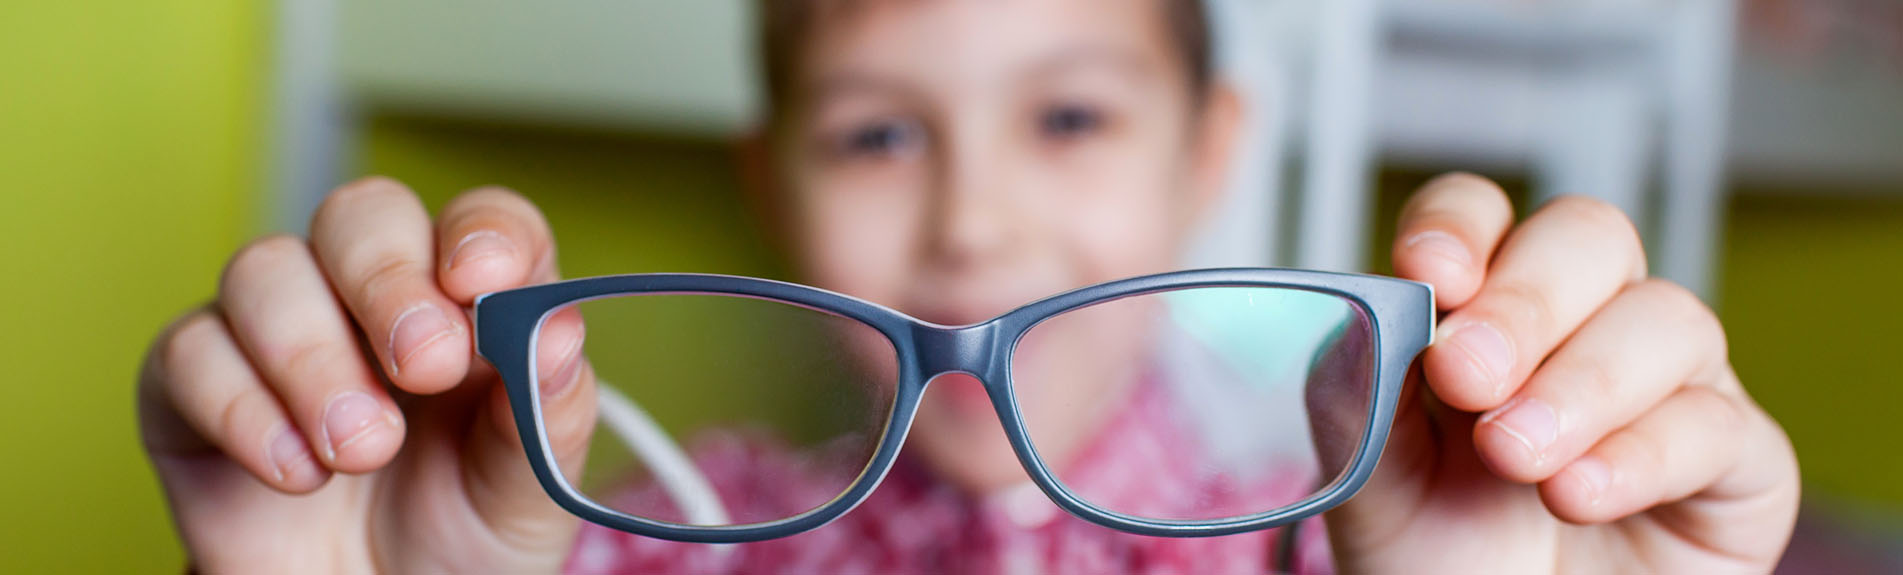 Myopia - Shortsightedness